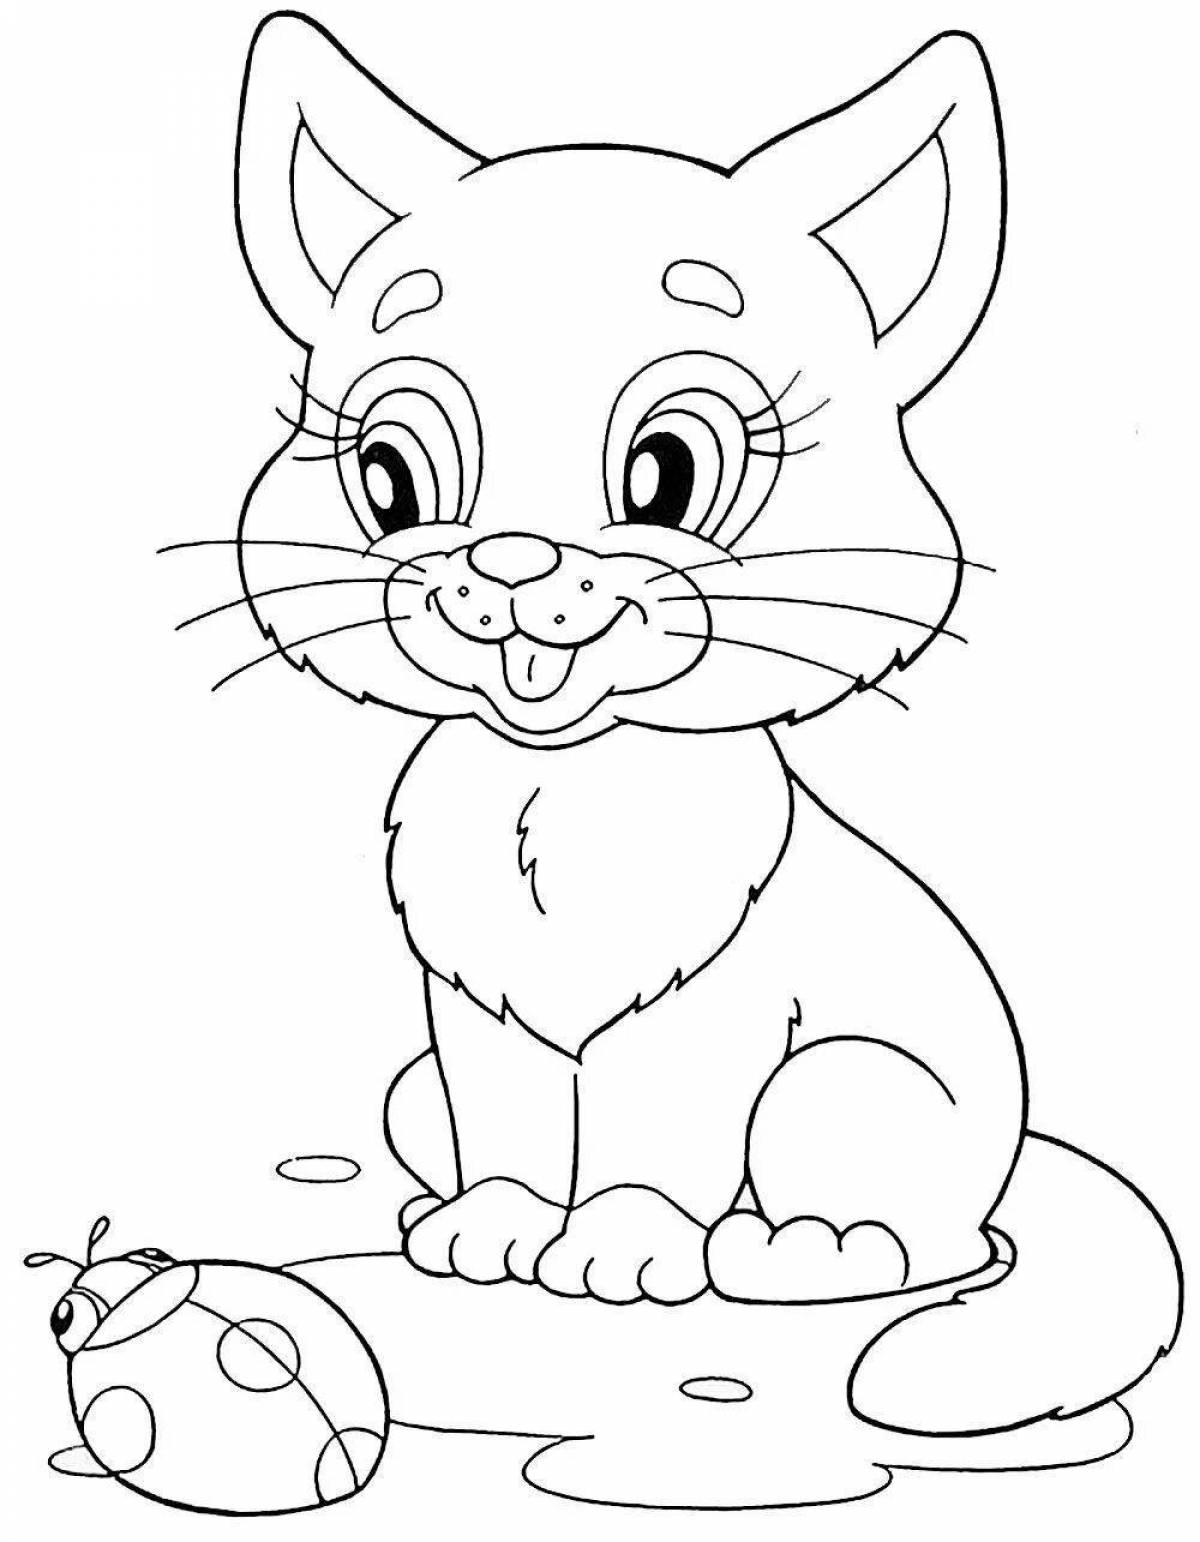 Snuggly coloring page cat для детей 2-3 лет